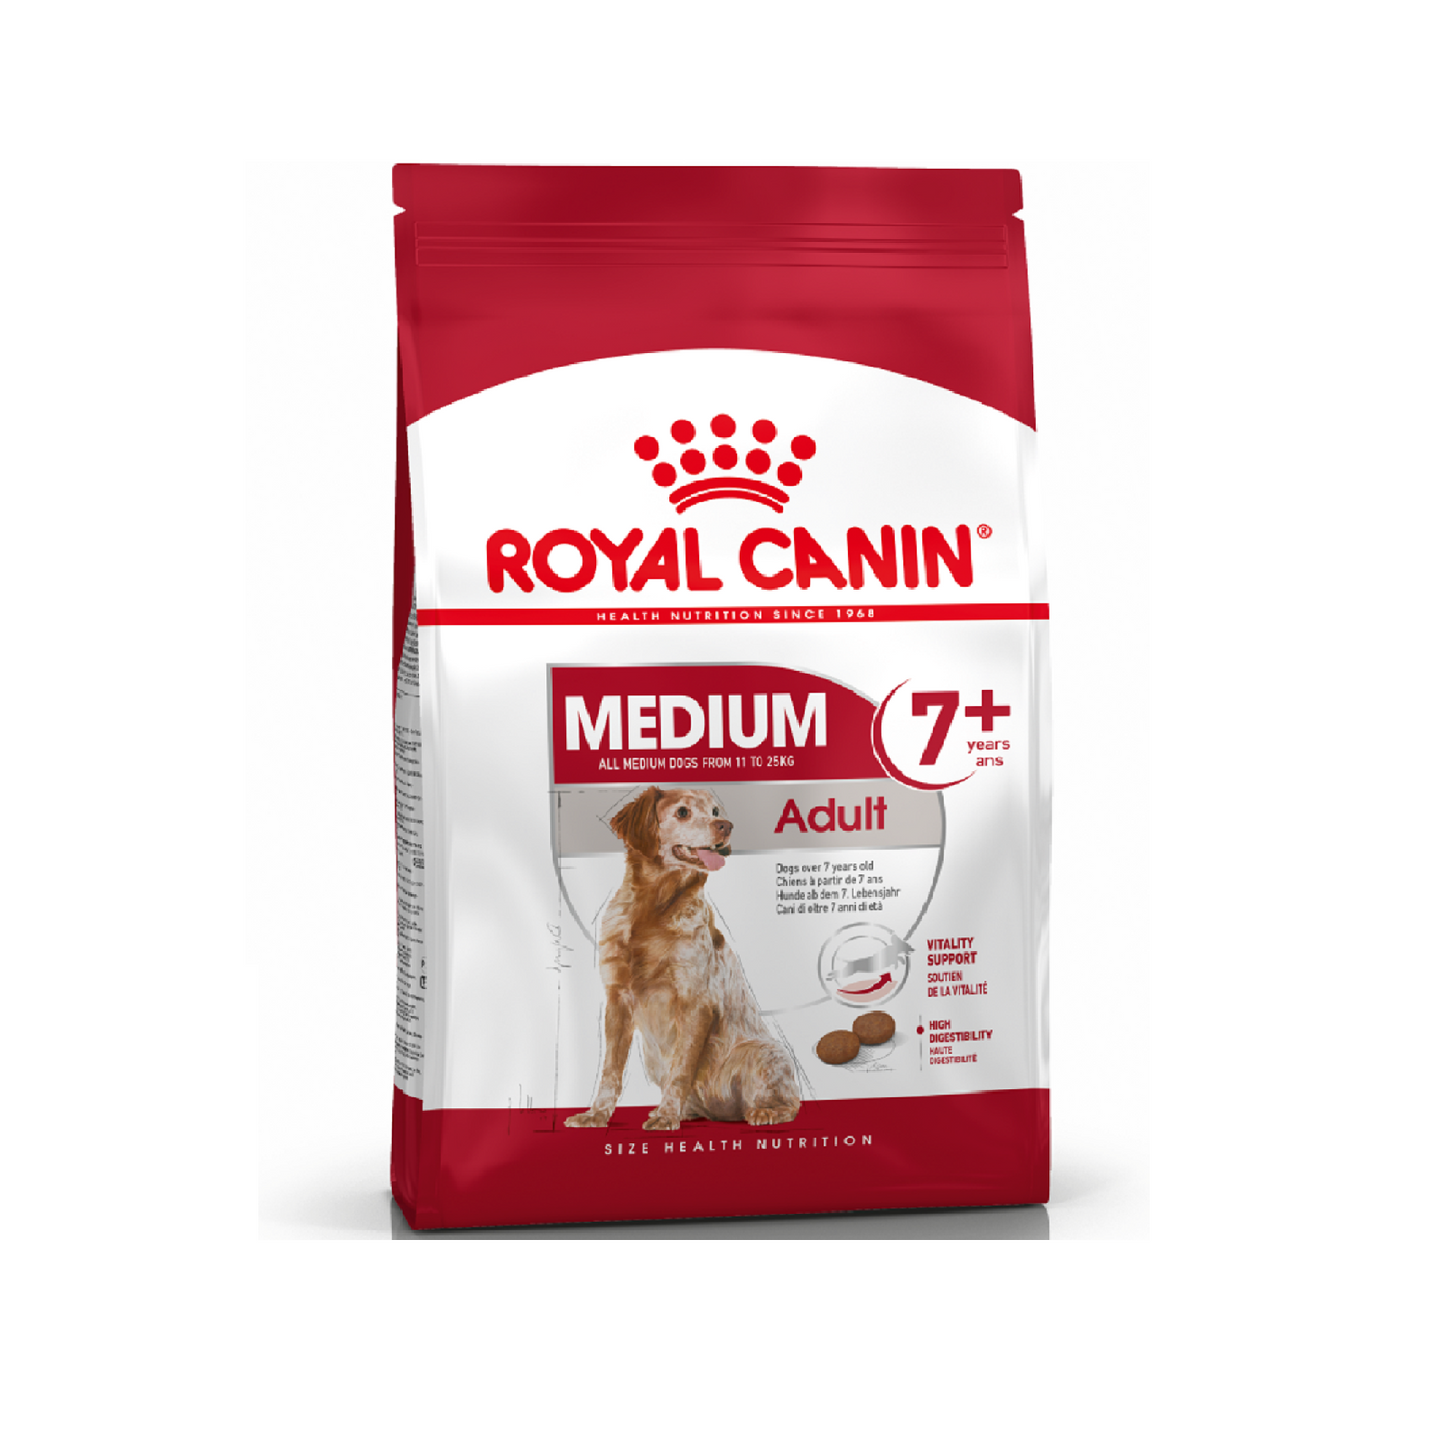 ROYAL CANIN - Medium Adult 7+